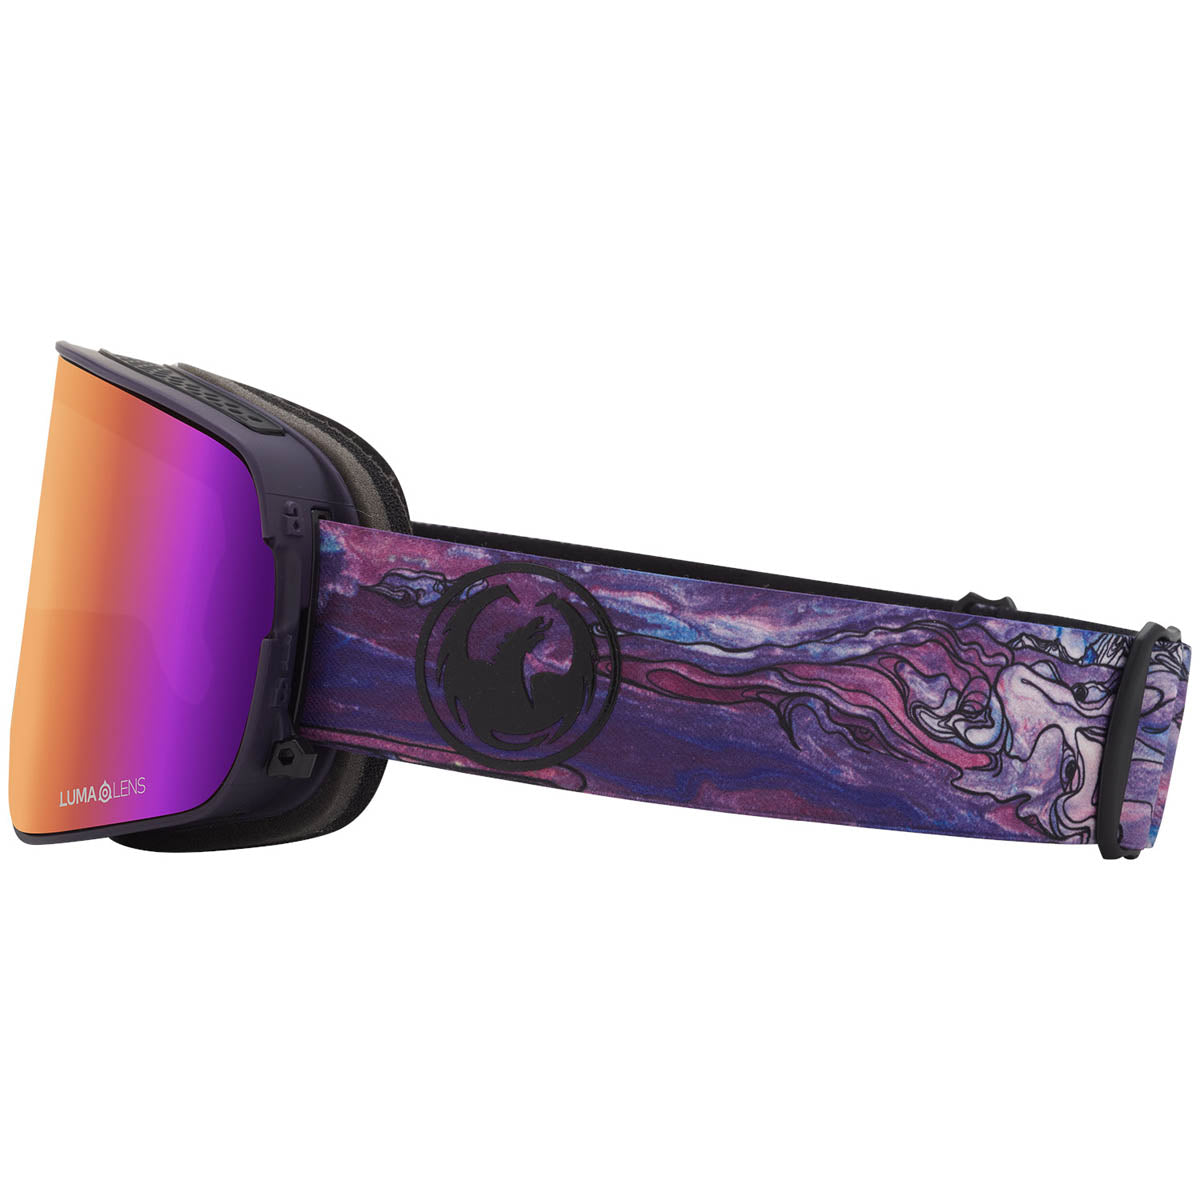 Dragon Nfx2 Snowboard Goggles - Benchet/Lumalens Purple ion image 2